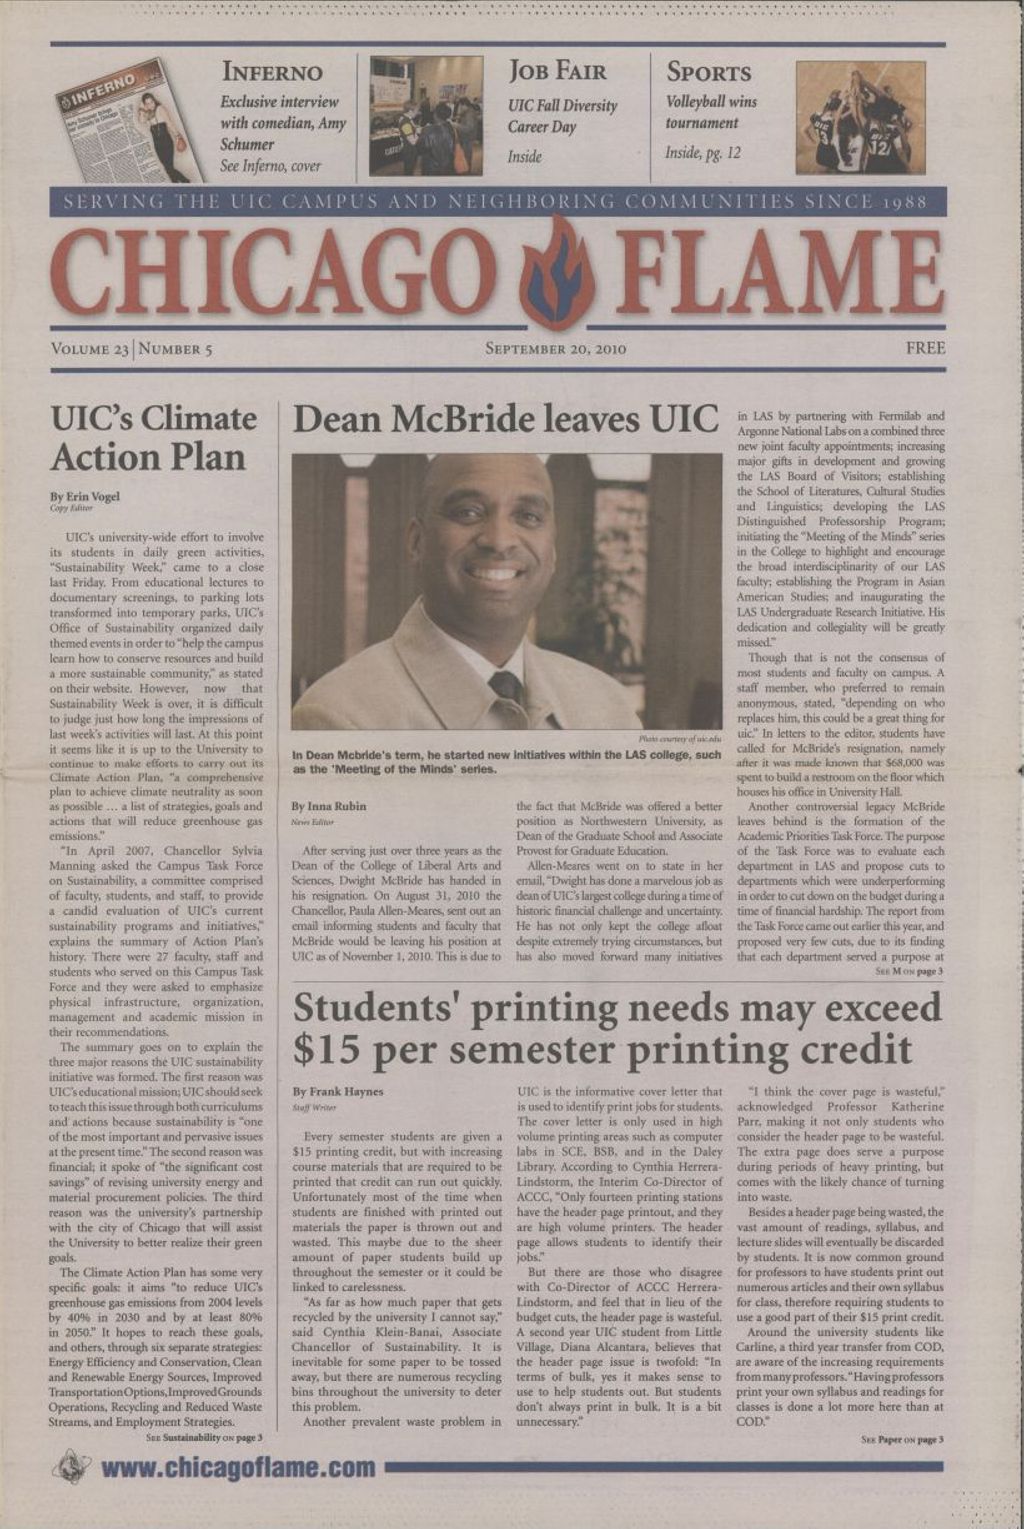 Chicago Flame (September 20, 2010)